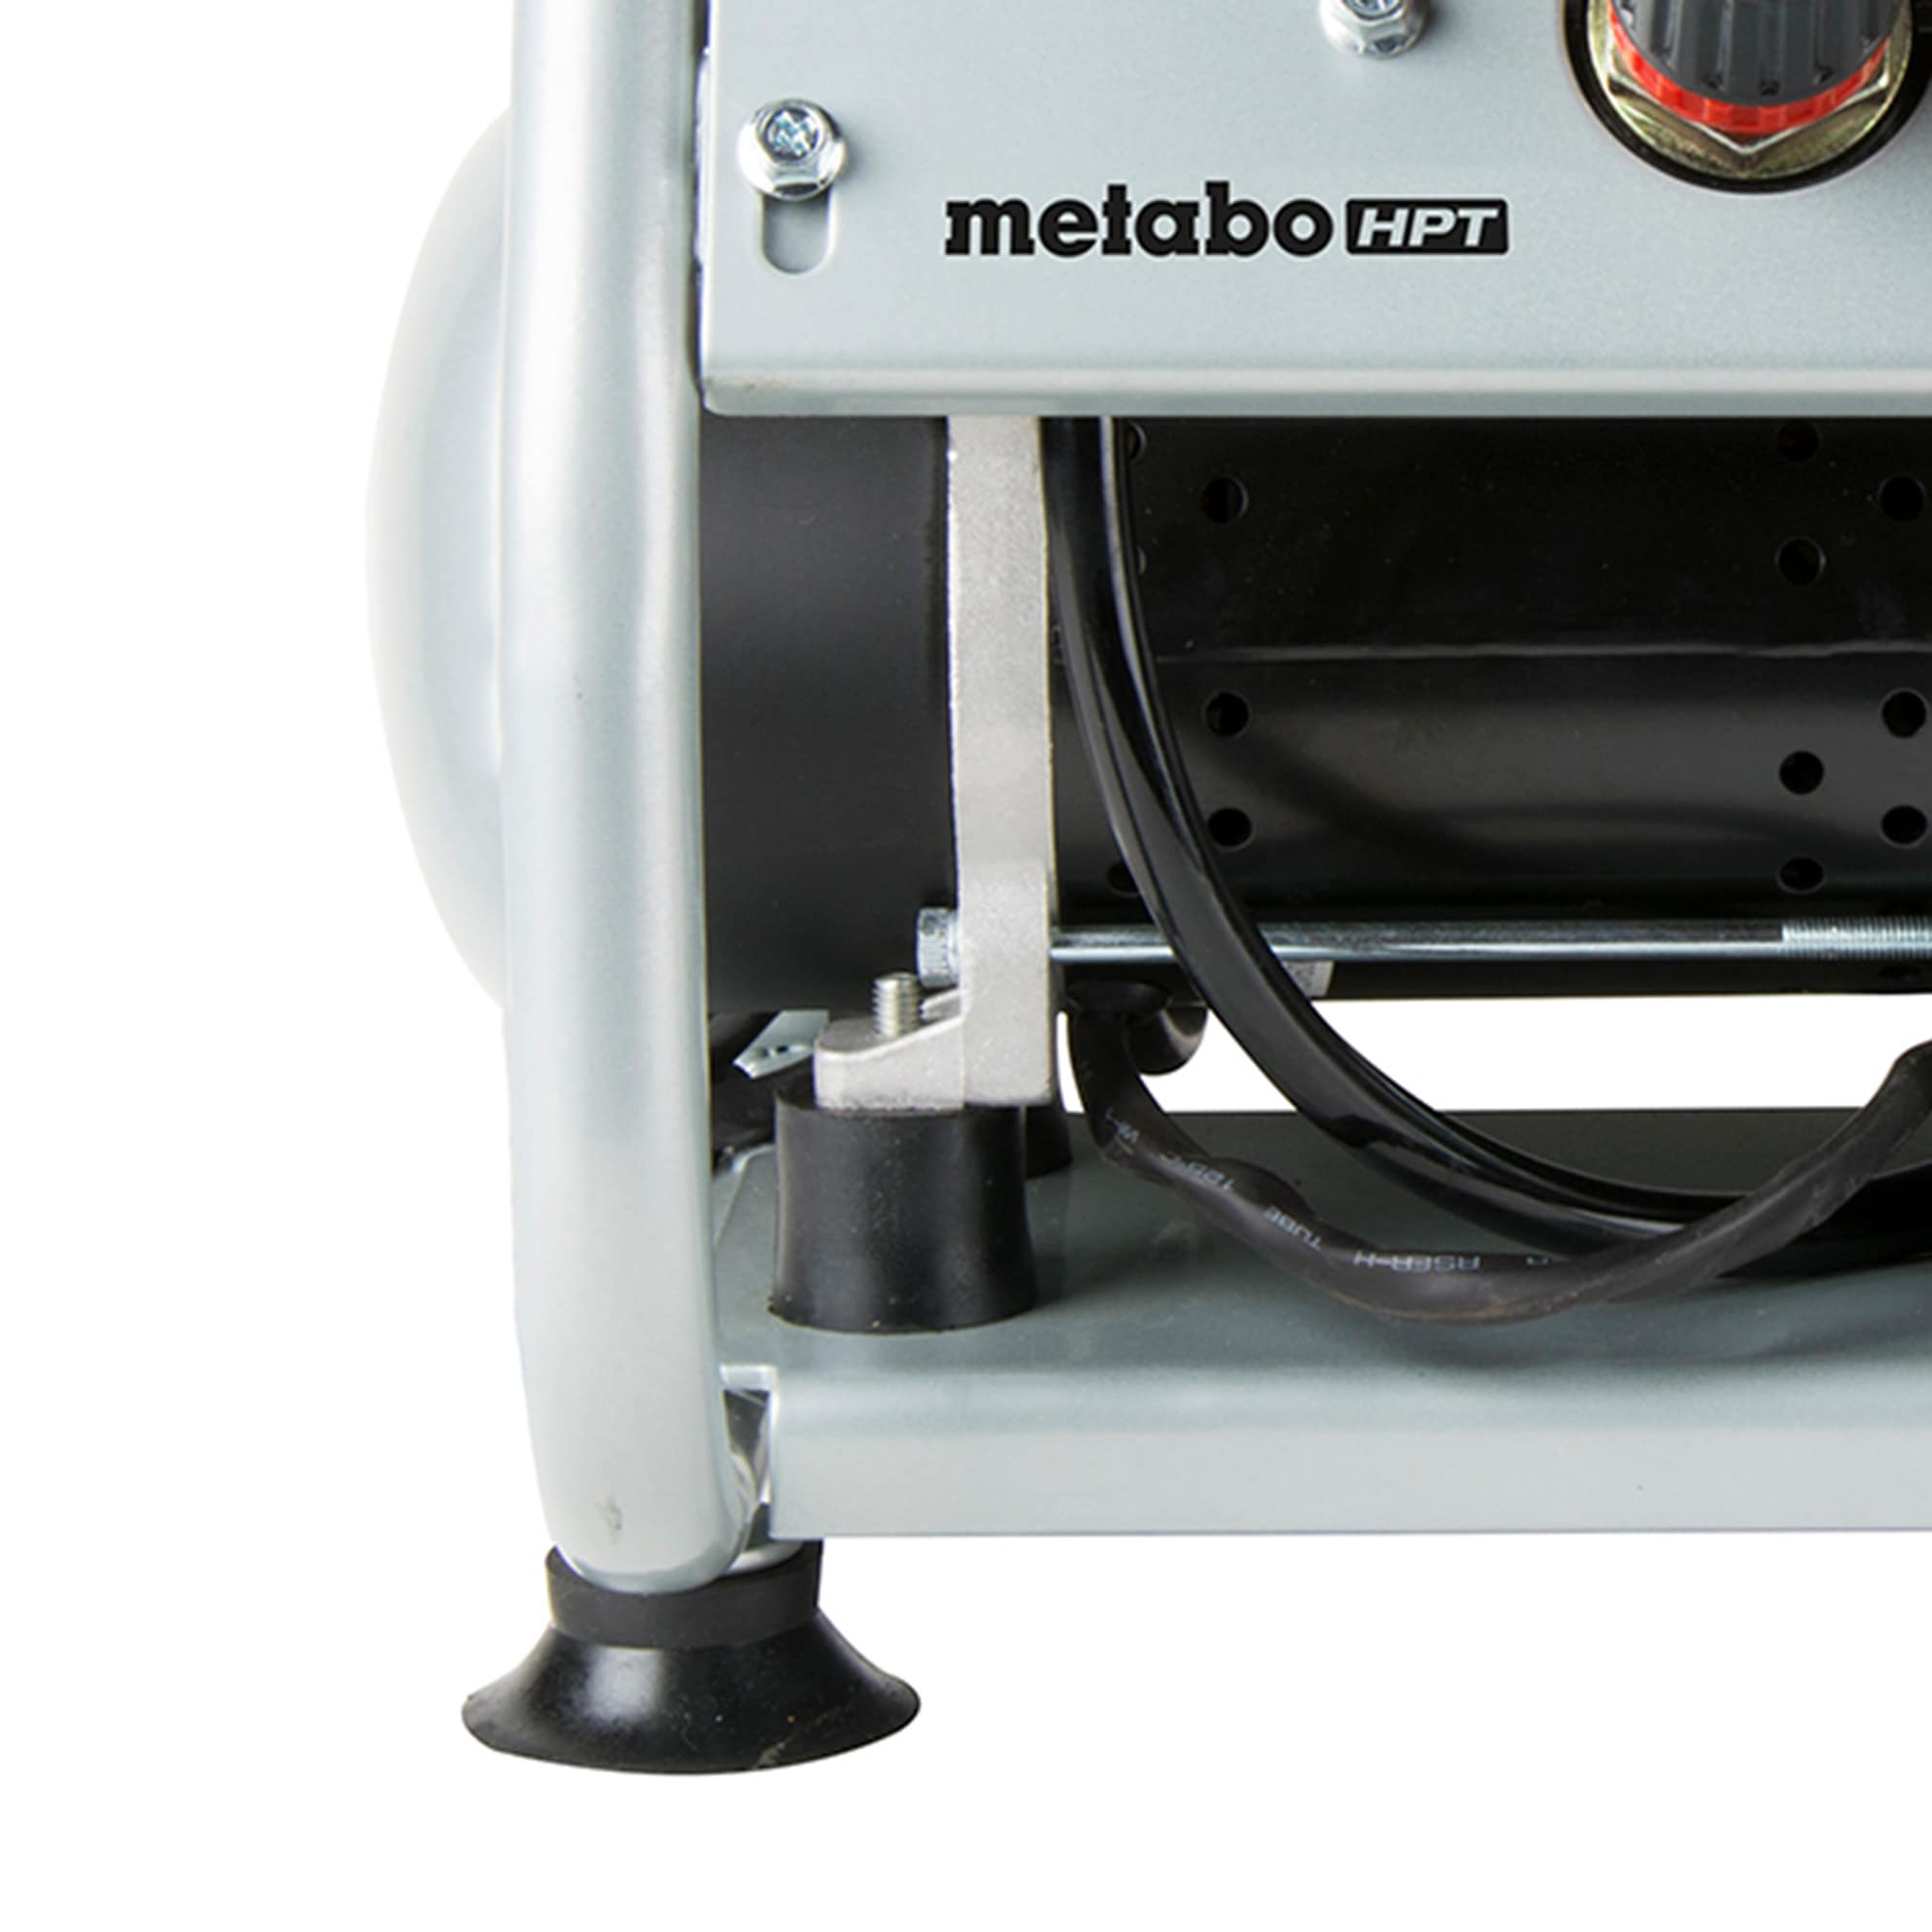 Metabo HPT 1-Gallon Portable 125 PSI Horizontal Quiet Air Compressor